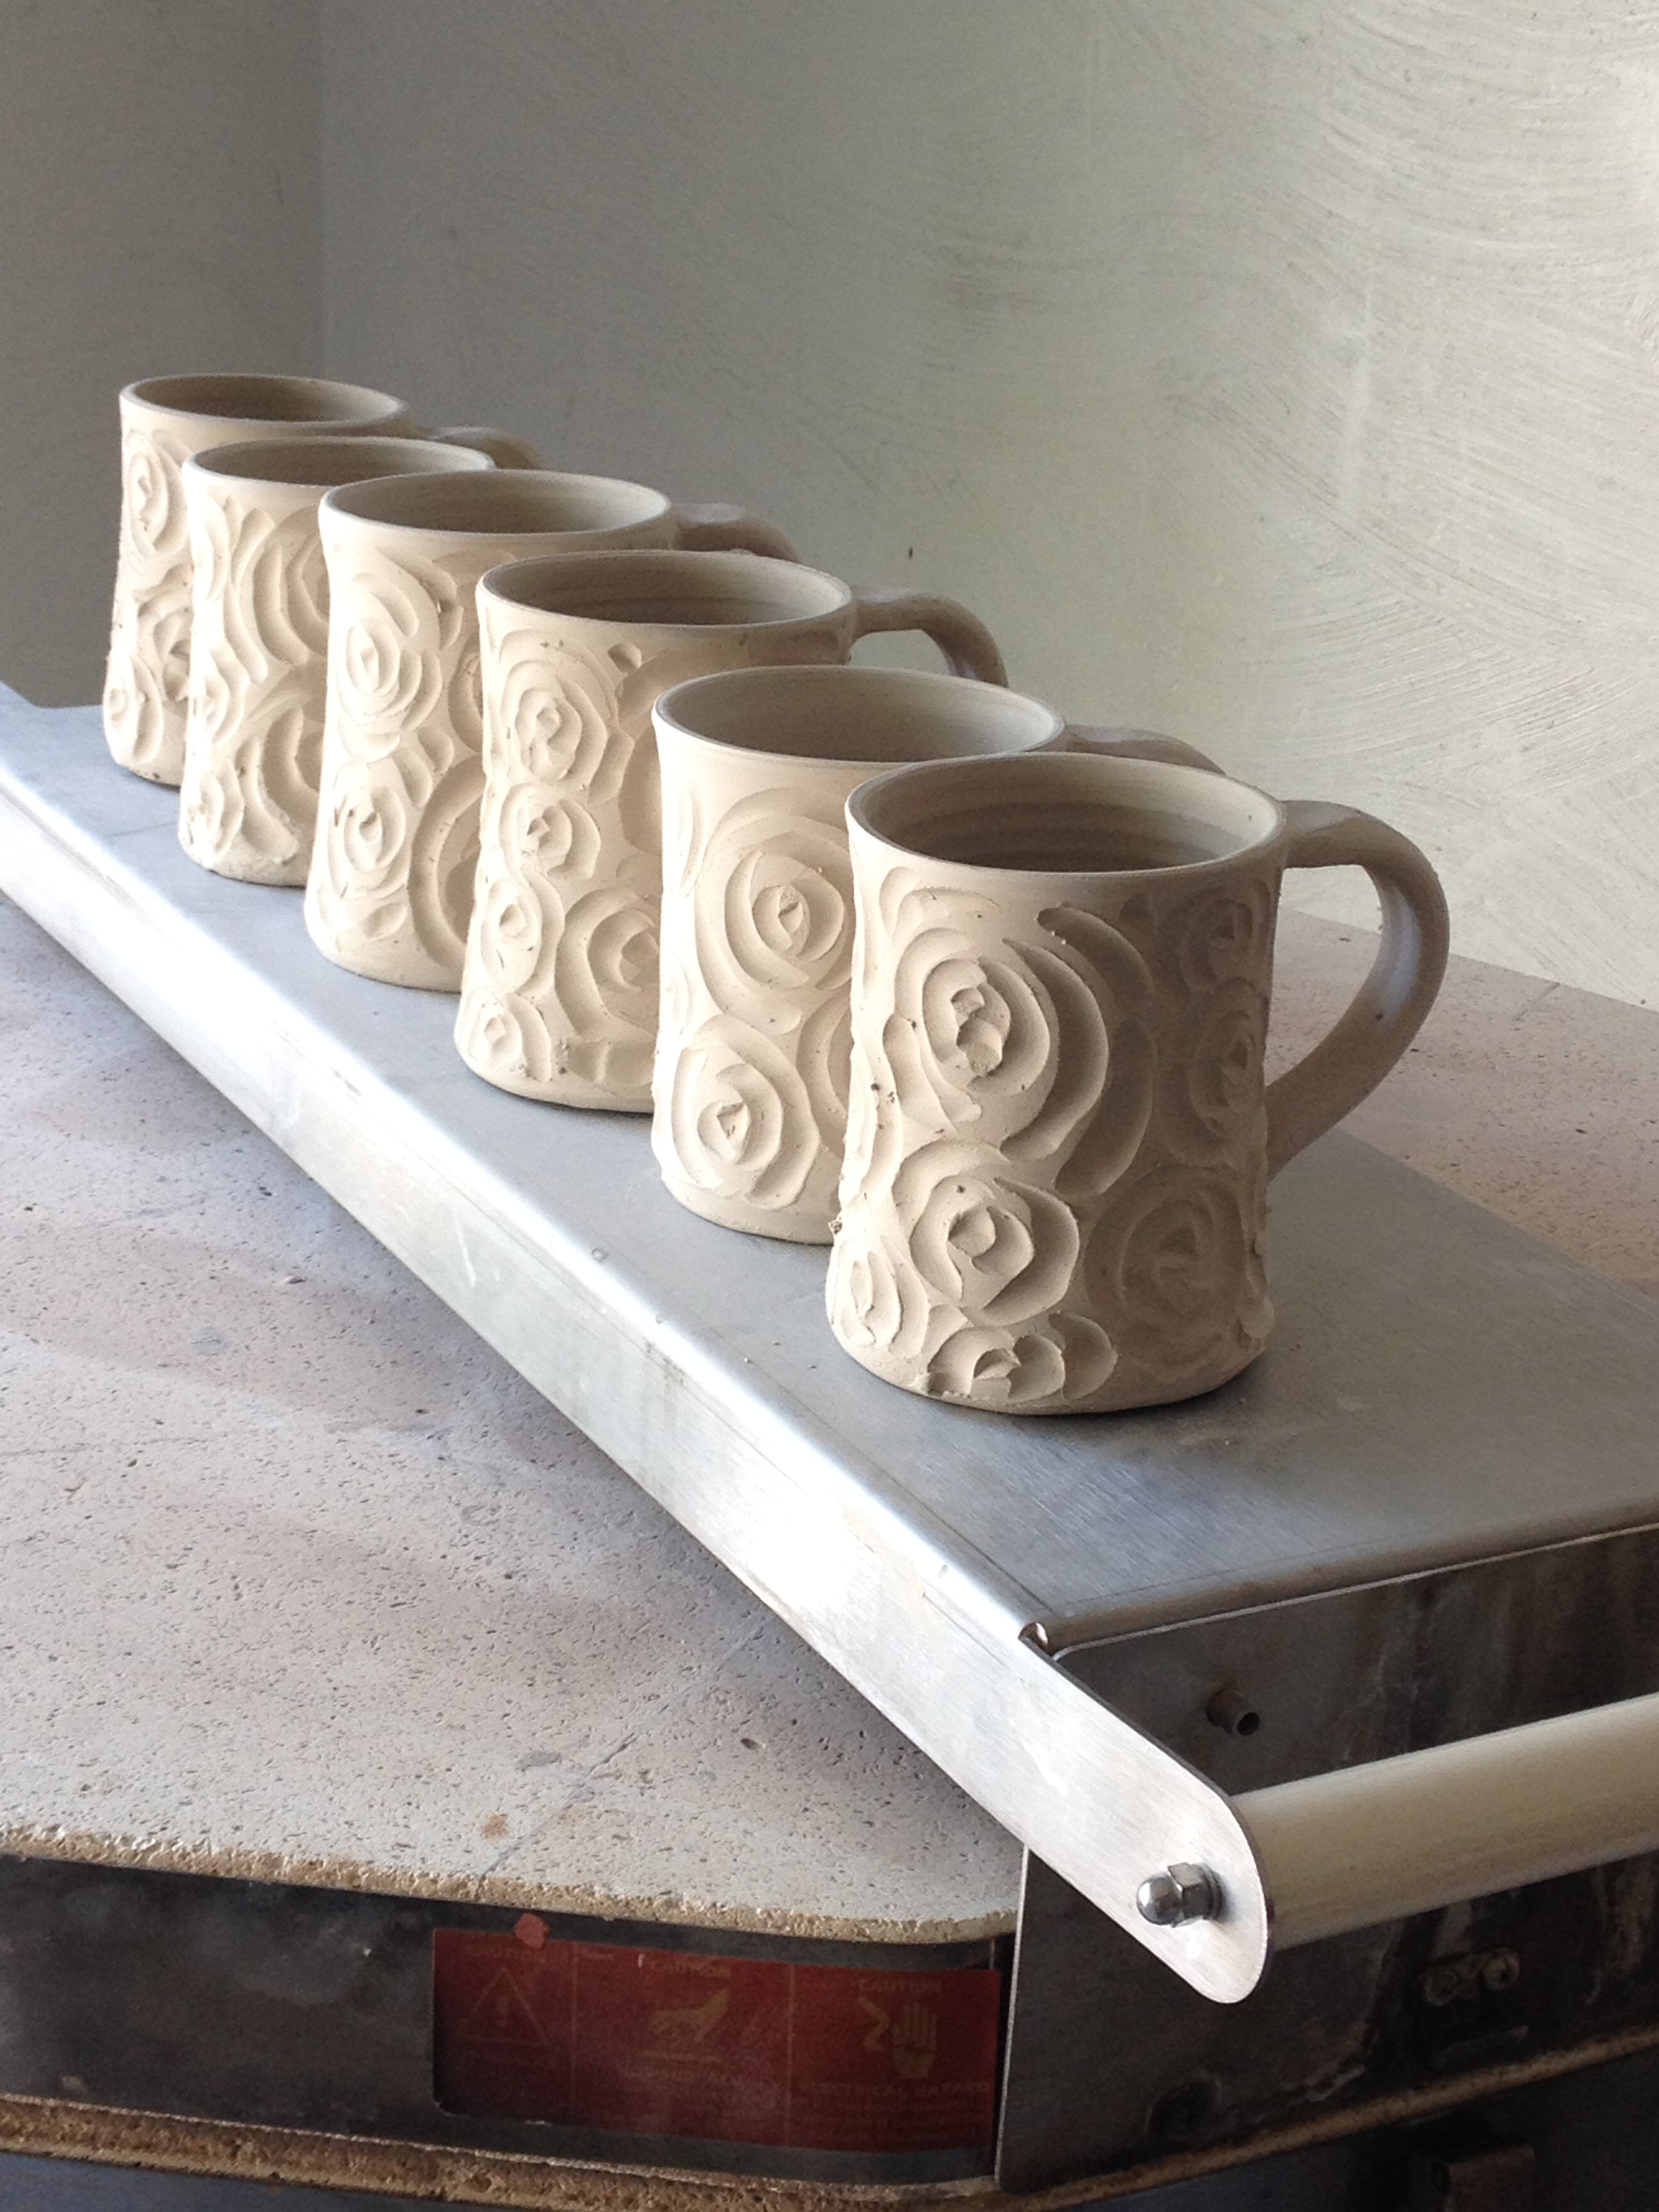 Carved mugs drying.jpg